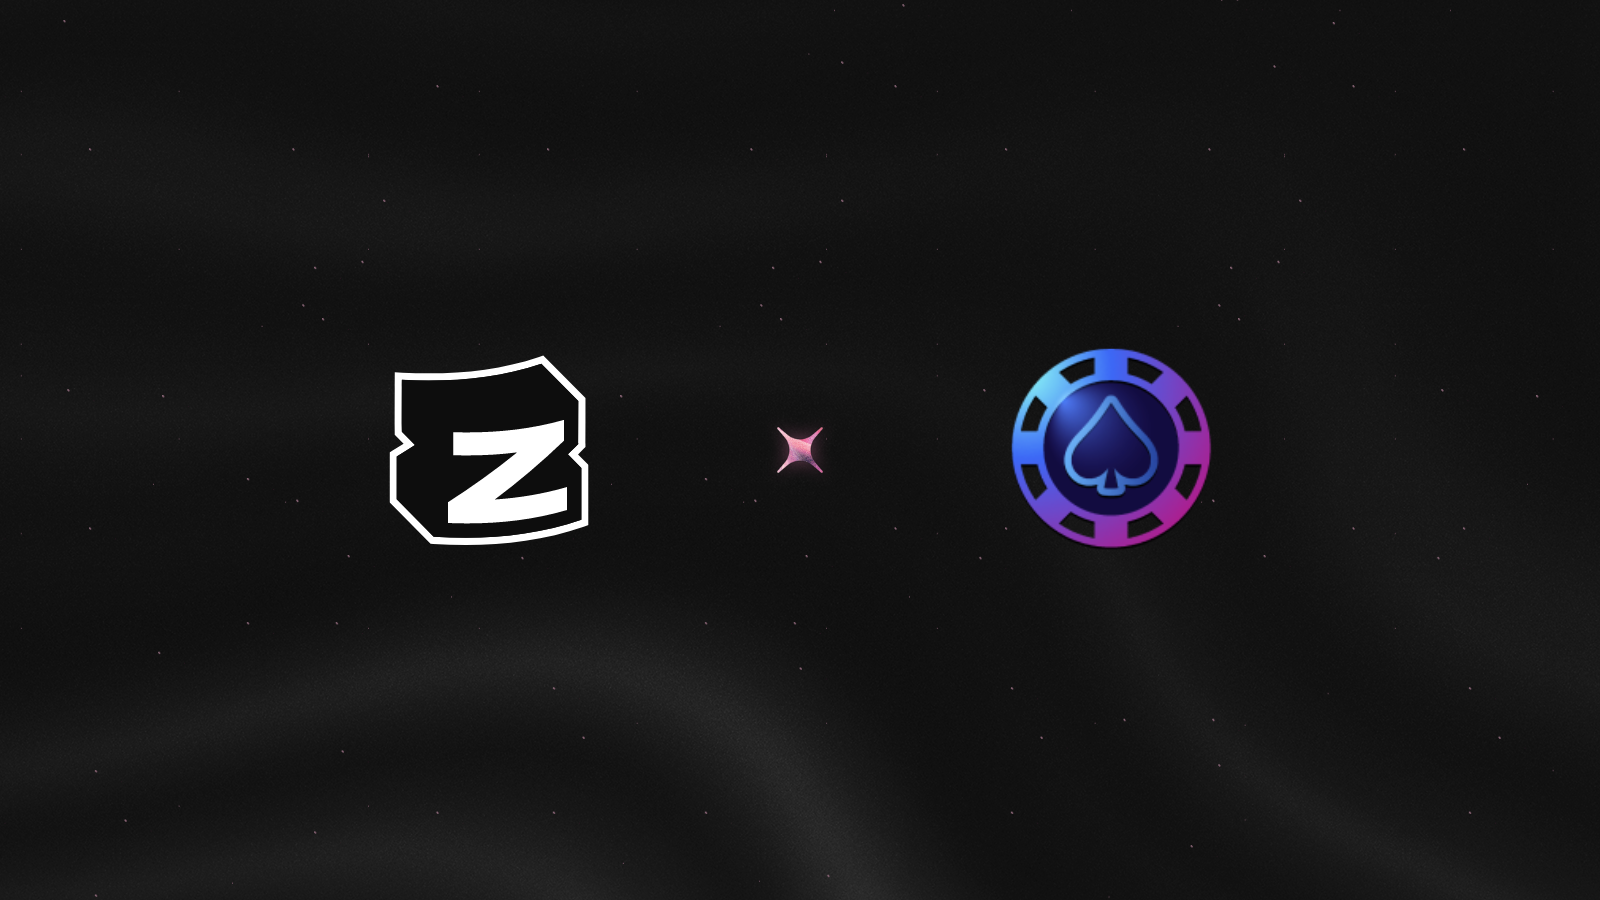 Zealy logo and Pokerlook logo